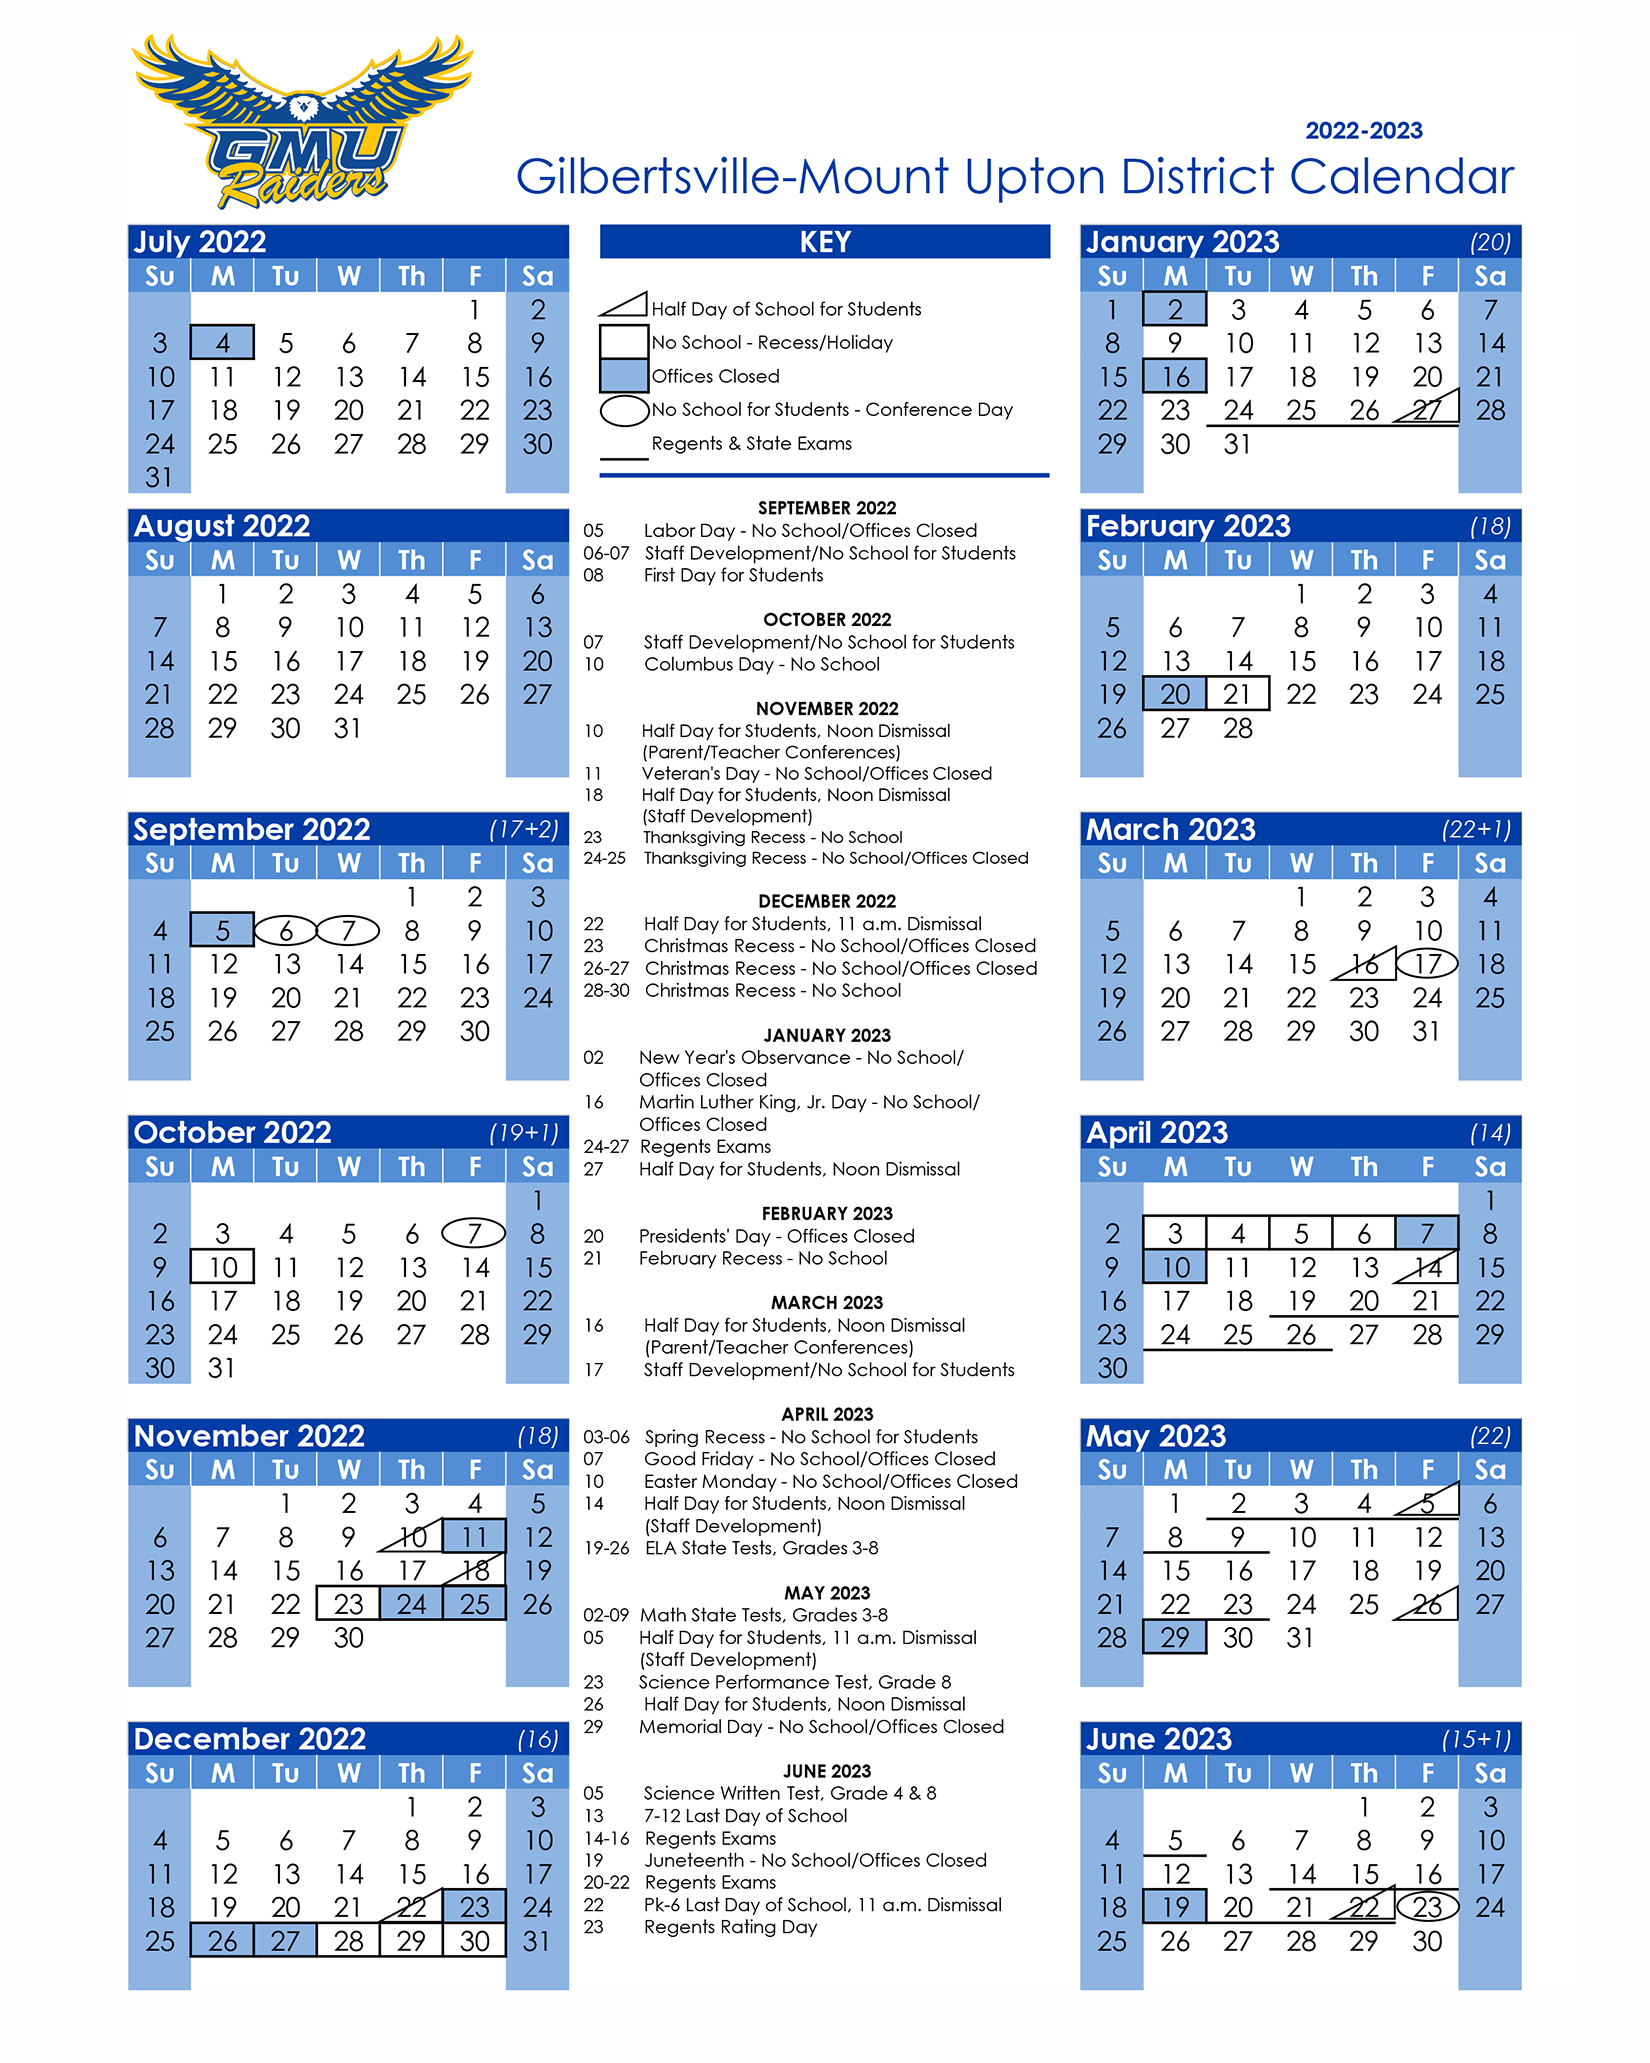 GMU 2022-2023 District Calendar Overview 